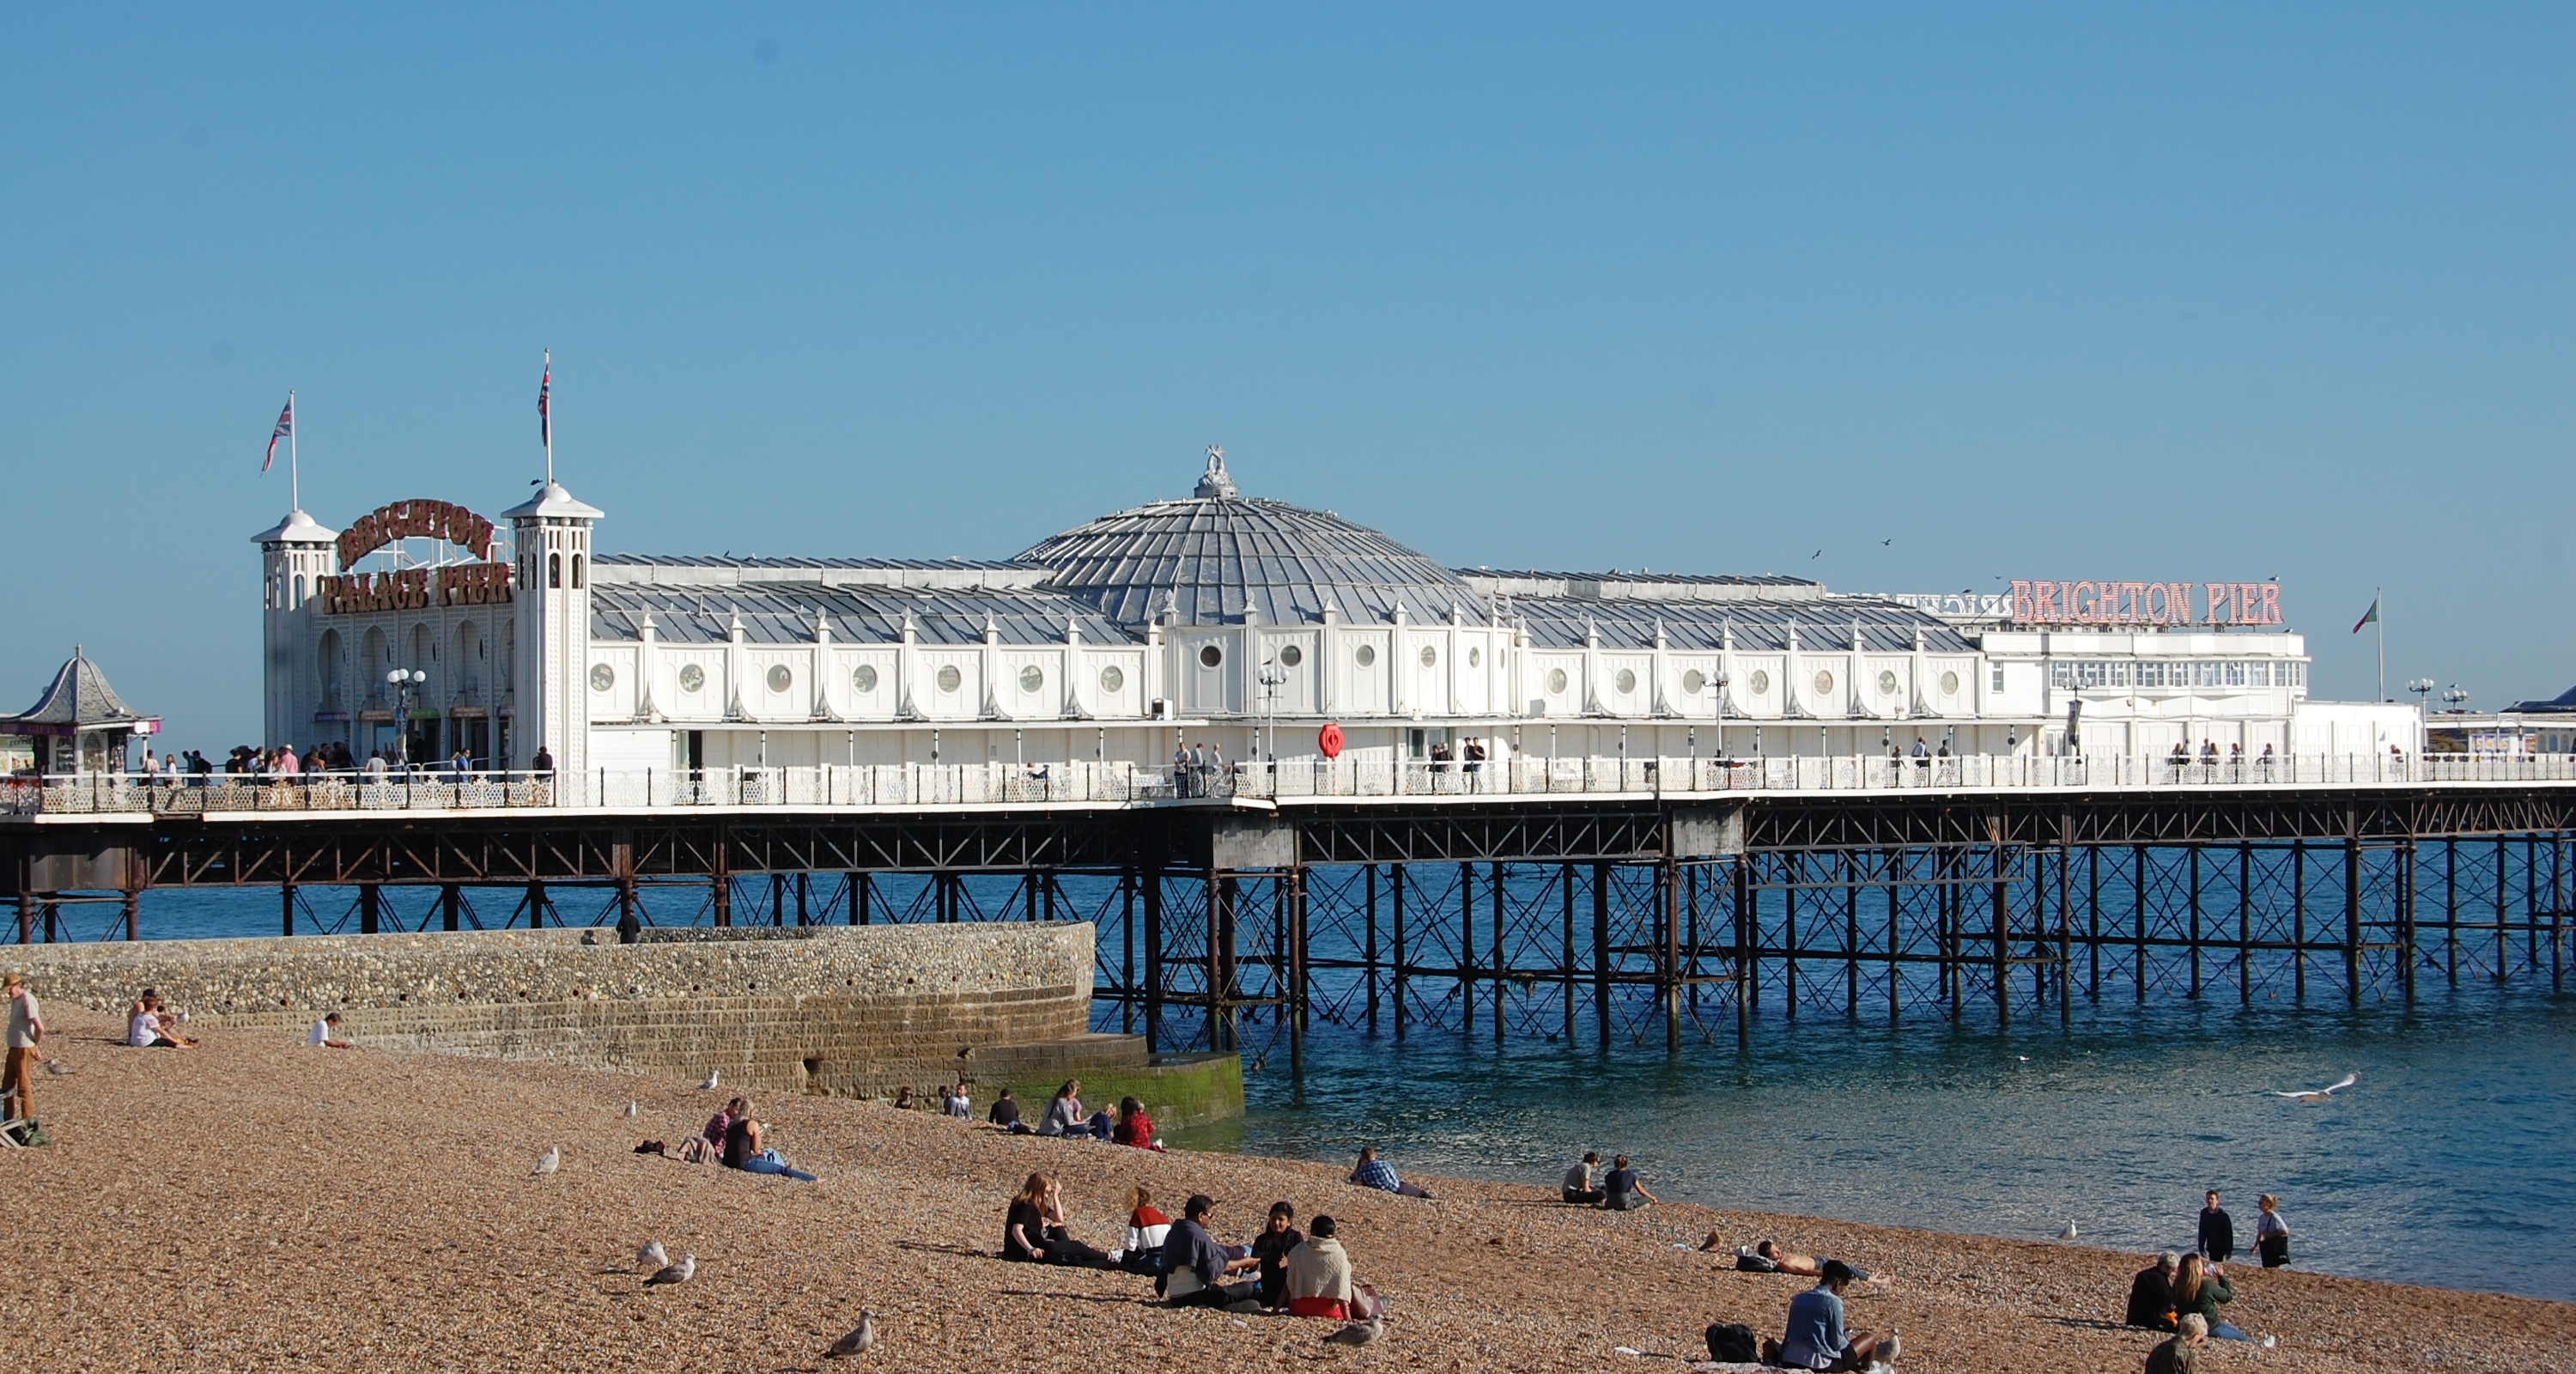 Brighton image